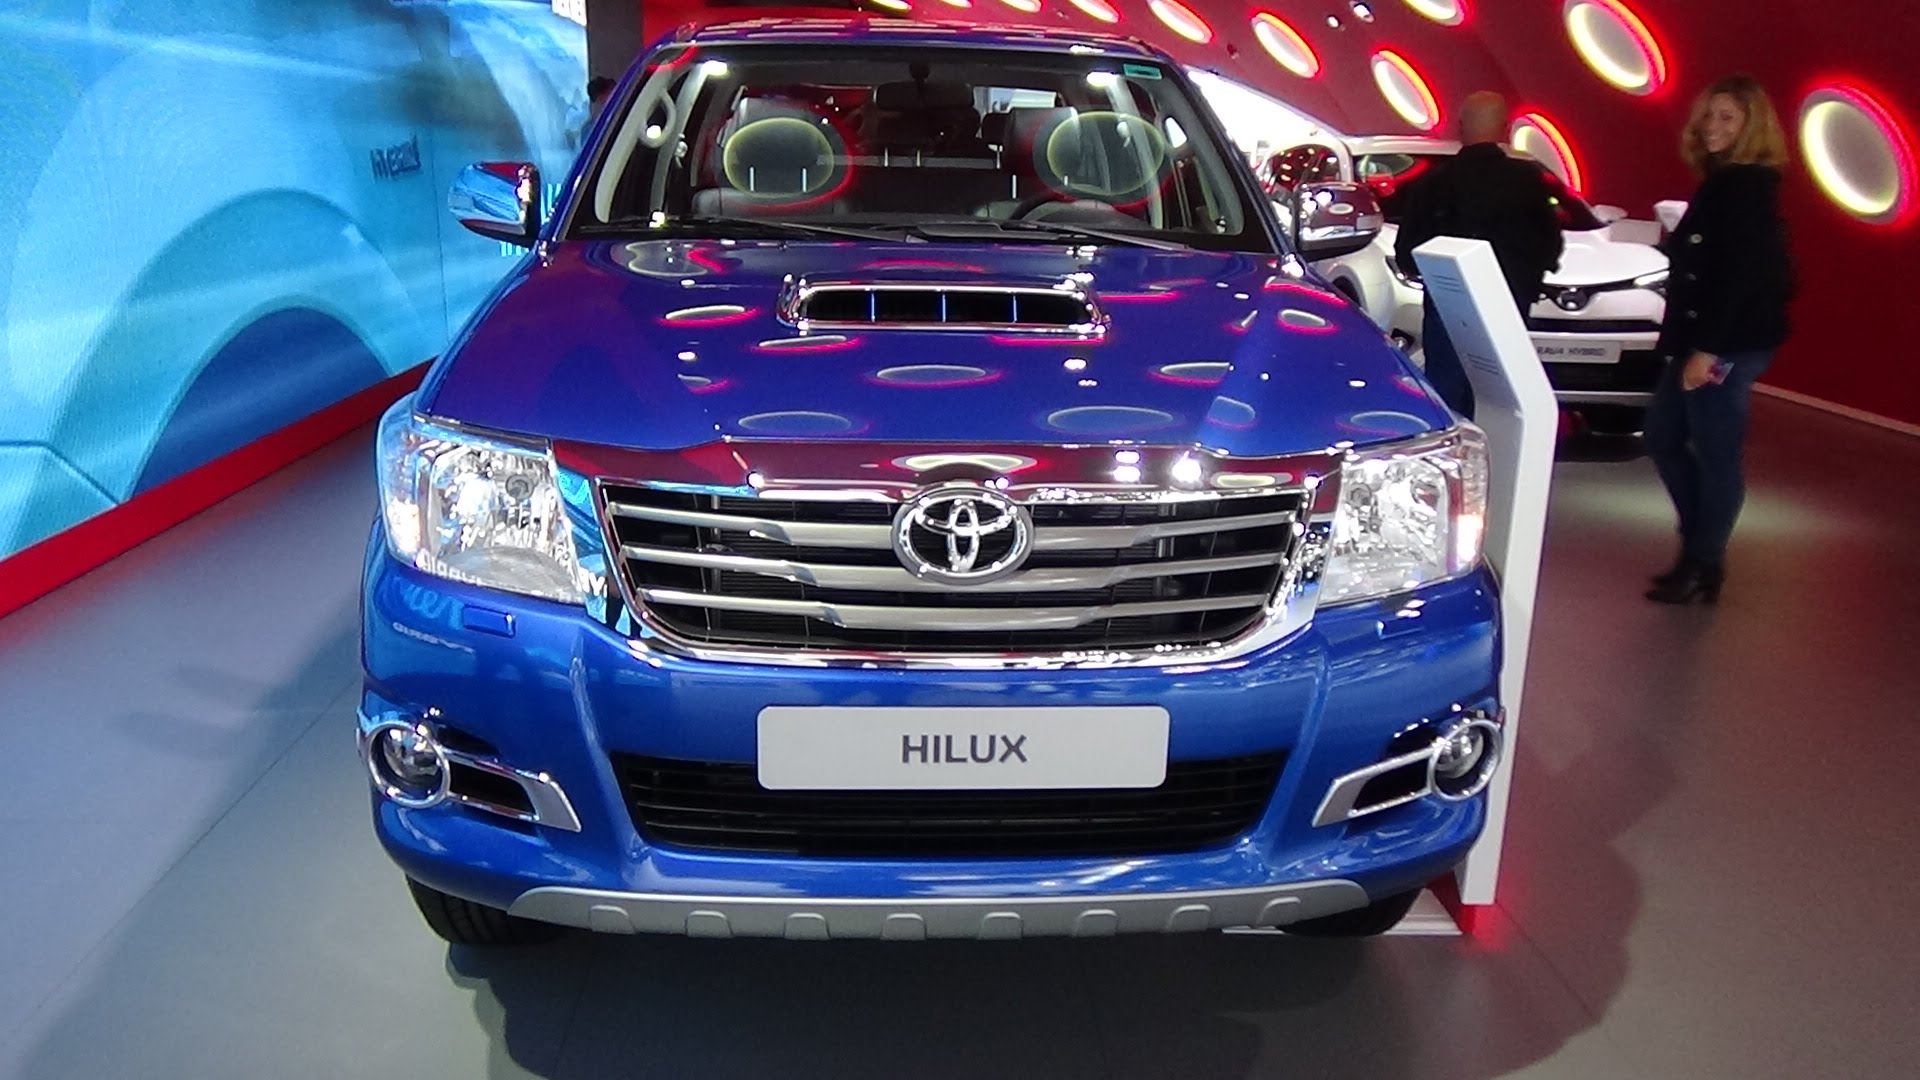 Fotos 360 del Toyota Hilux #VidePan en #IAA2015